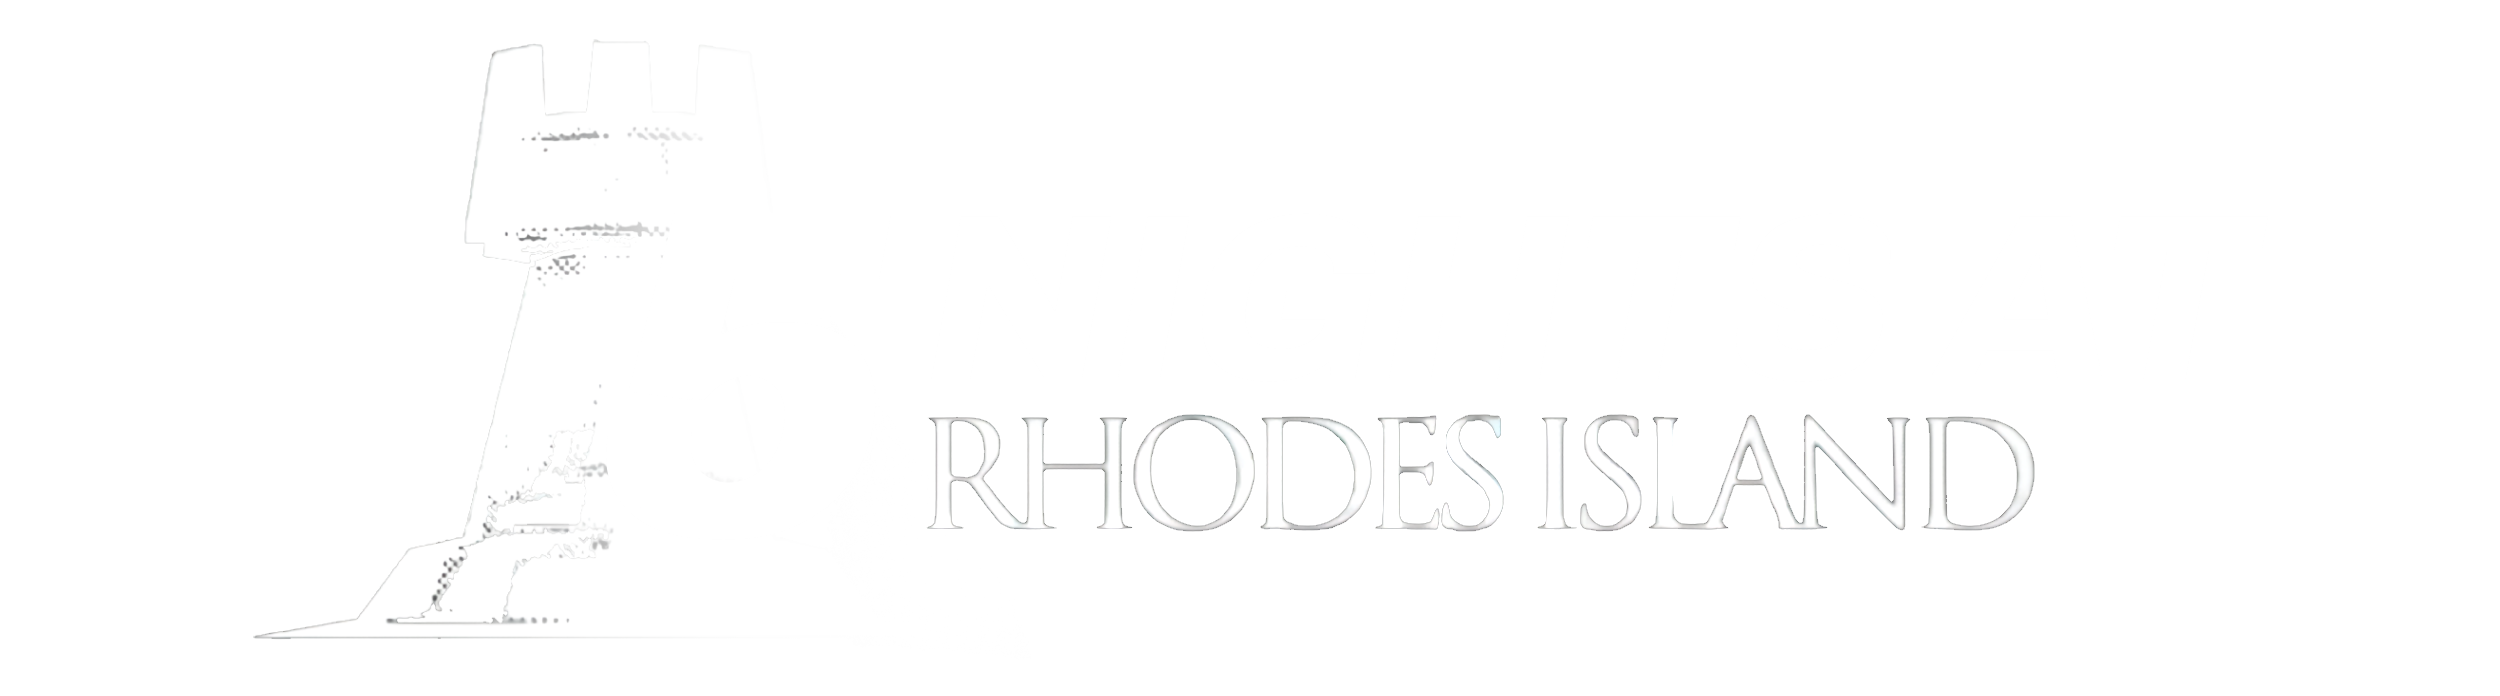 Five Nights At Rhodes Island